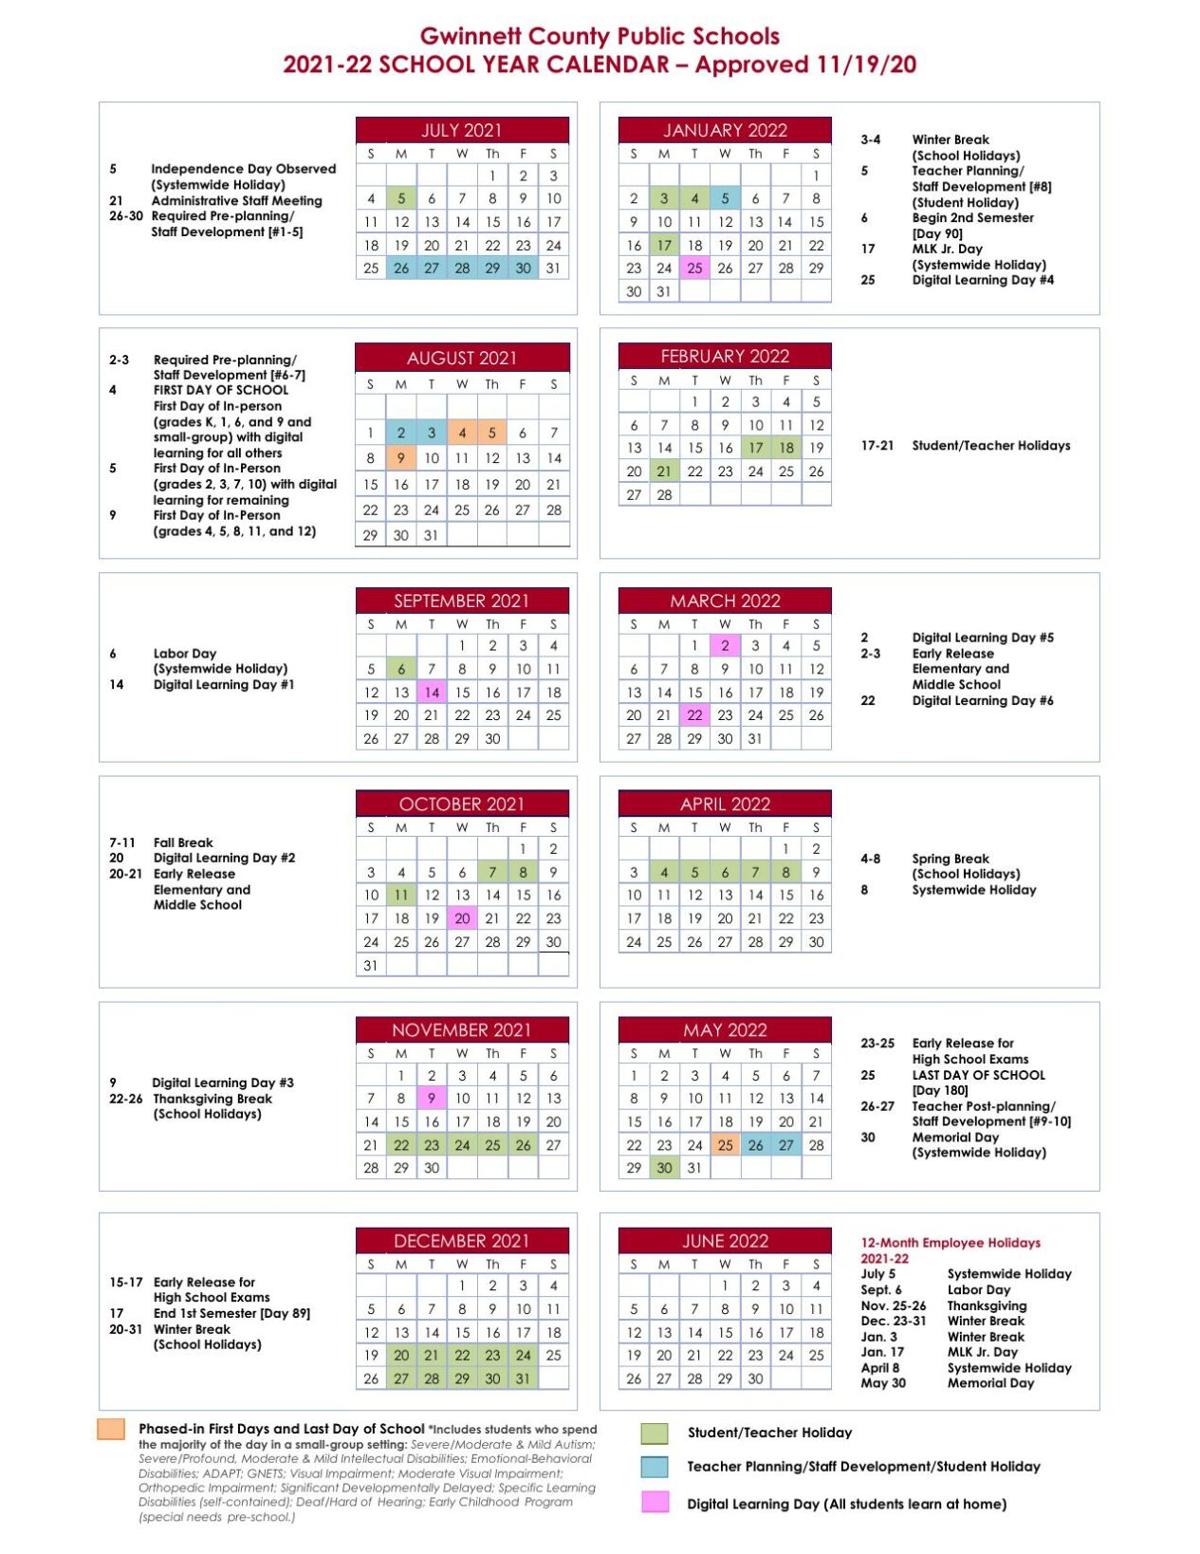 Georgia Tech Calendar 2022 2023 Gwinnett County Public Schools' 2021-2022 School Year Calendar | |  Gwinnettdailypost.com